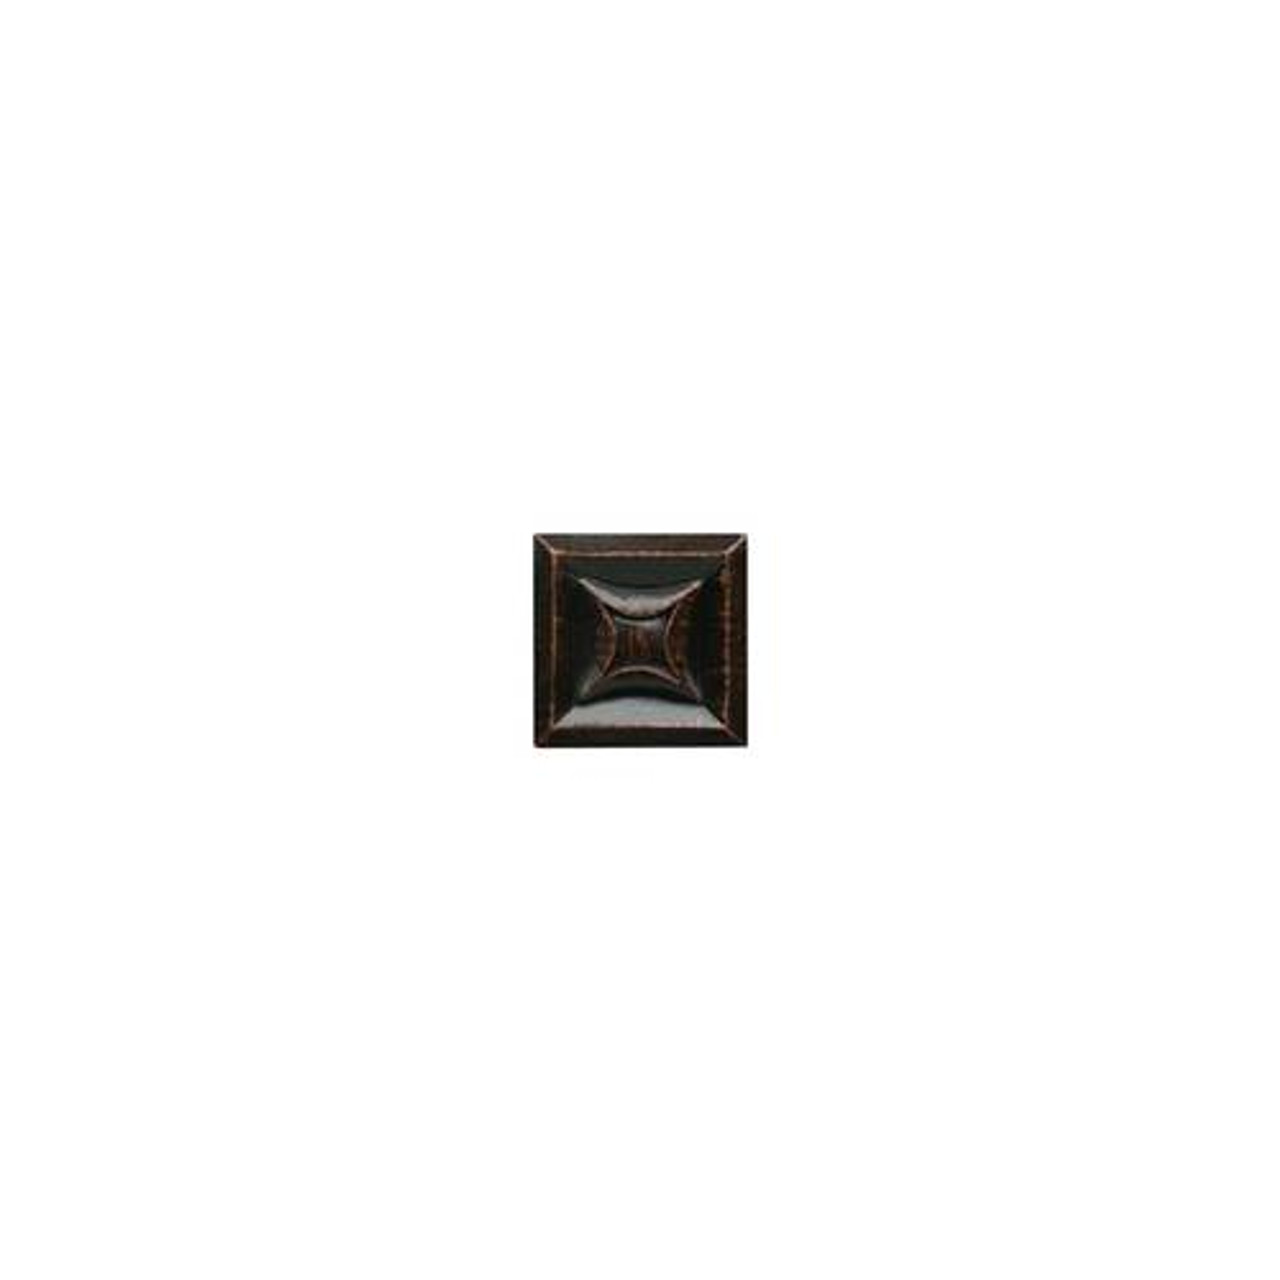 Armor Oil Rubbed Bronze Star Dot 2x2 - Tiles Direct Store